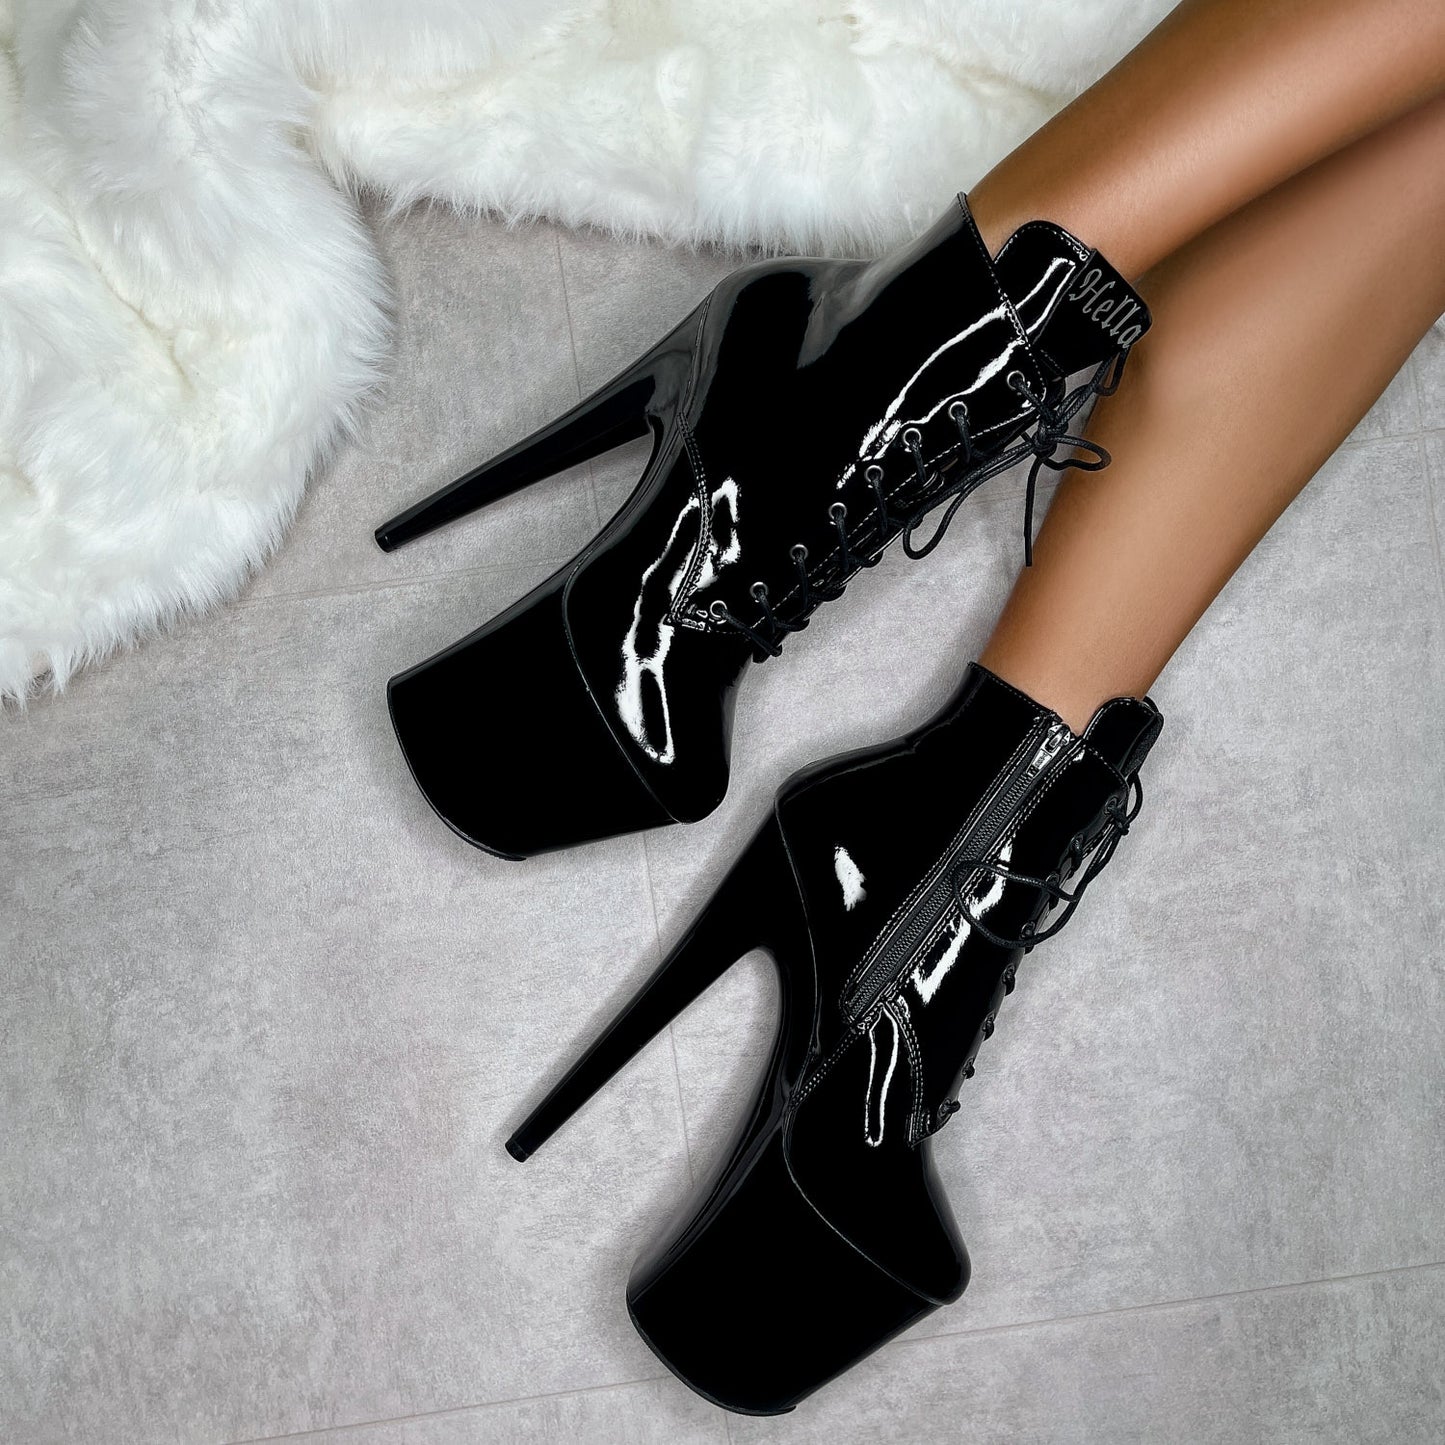 Black Beatle - Ankle Boot - 8 INCH, stripper shoe, stripper heel, pole heel, not a pleaser, platform, dancer, pole dance, floor work